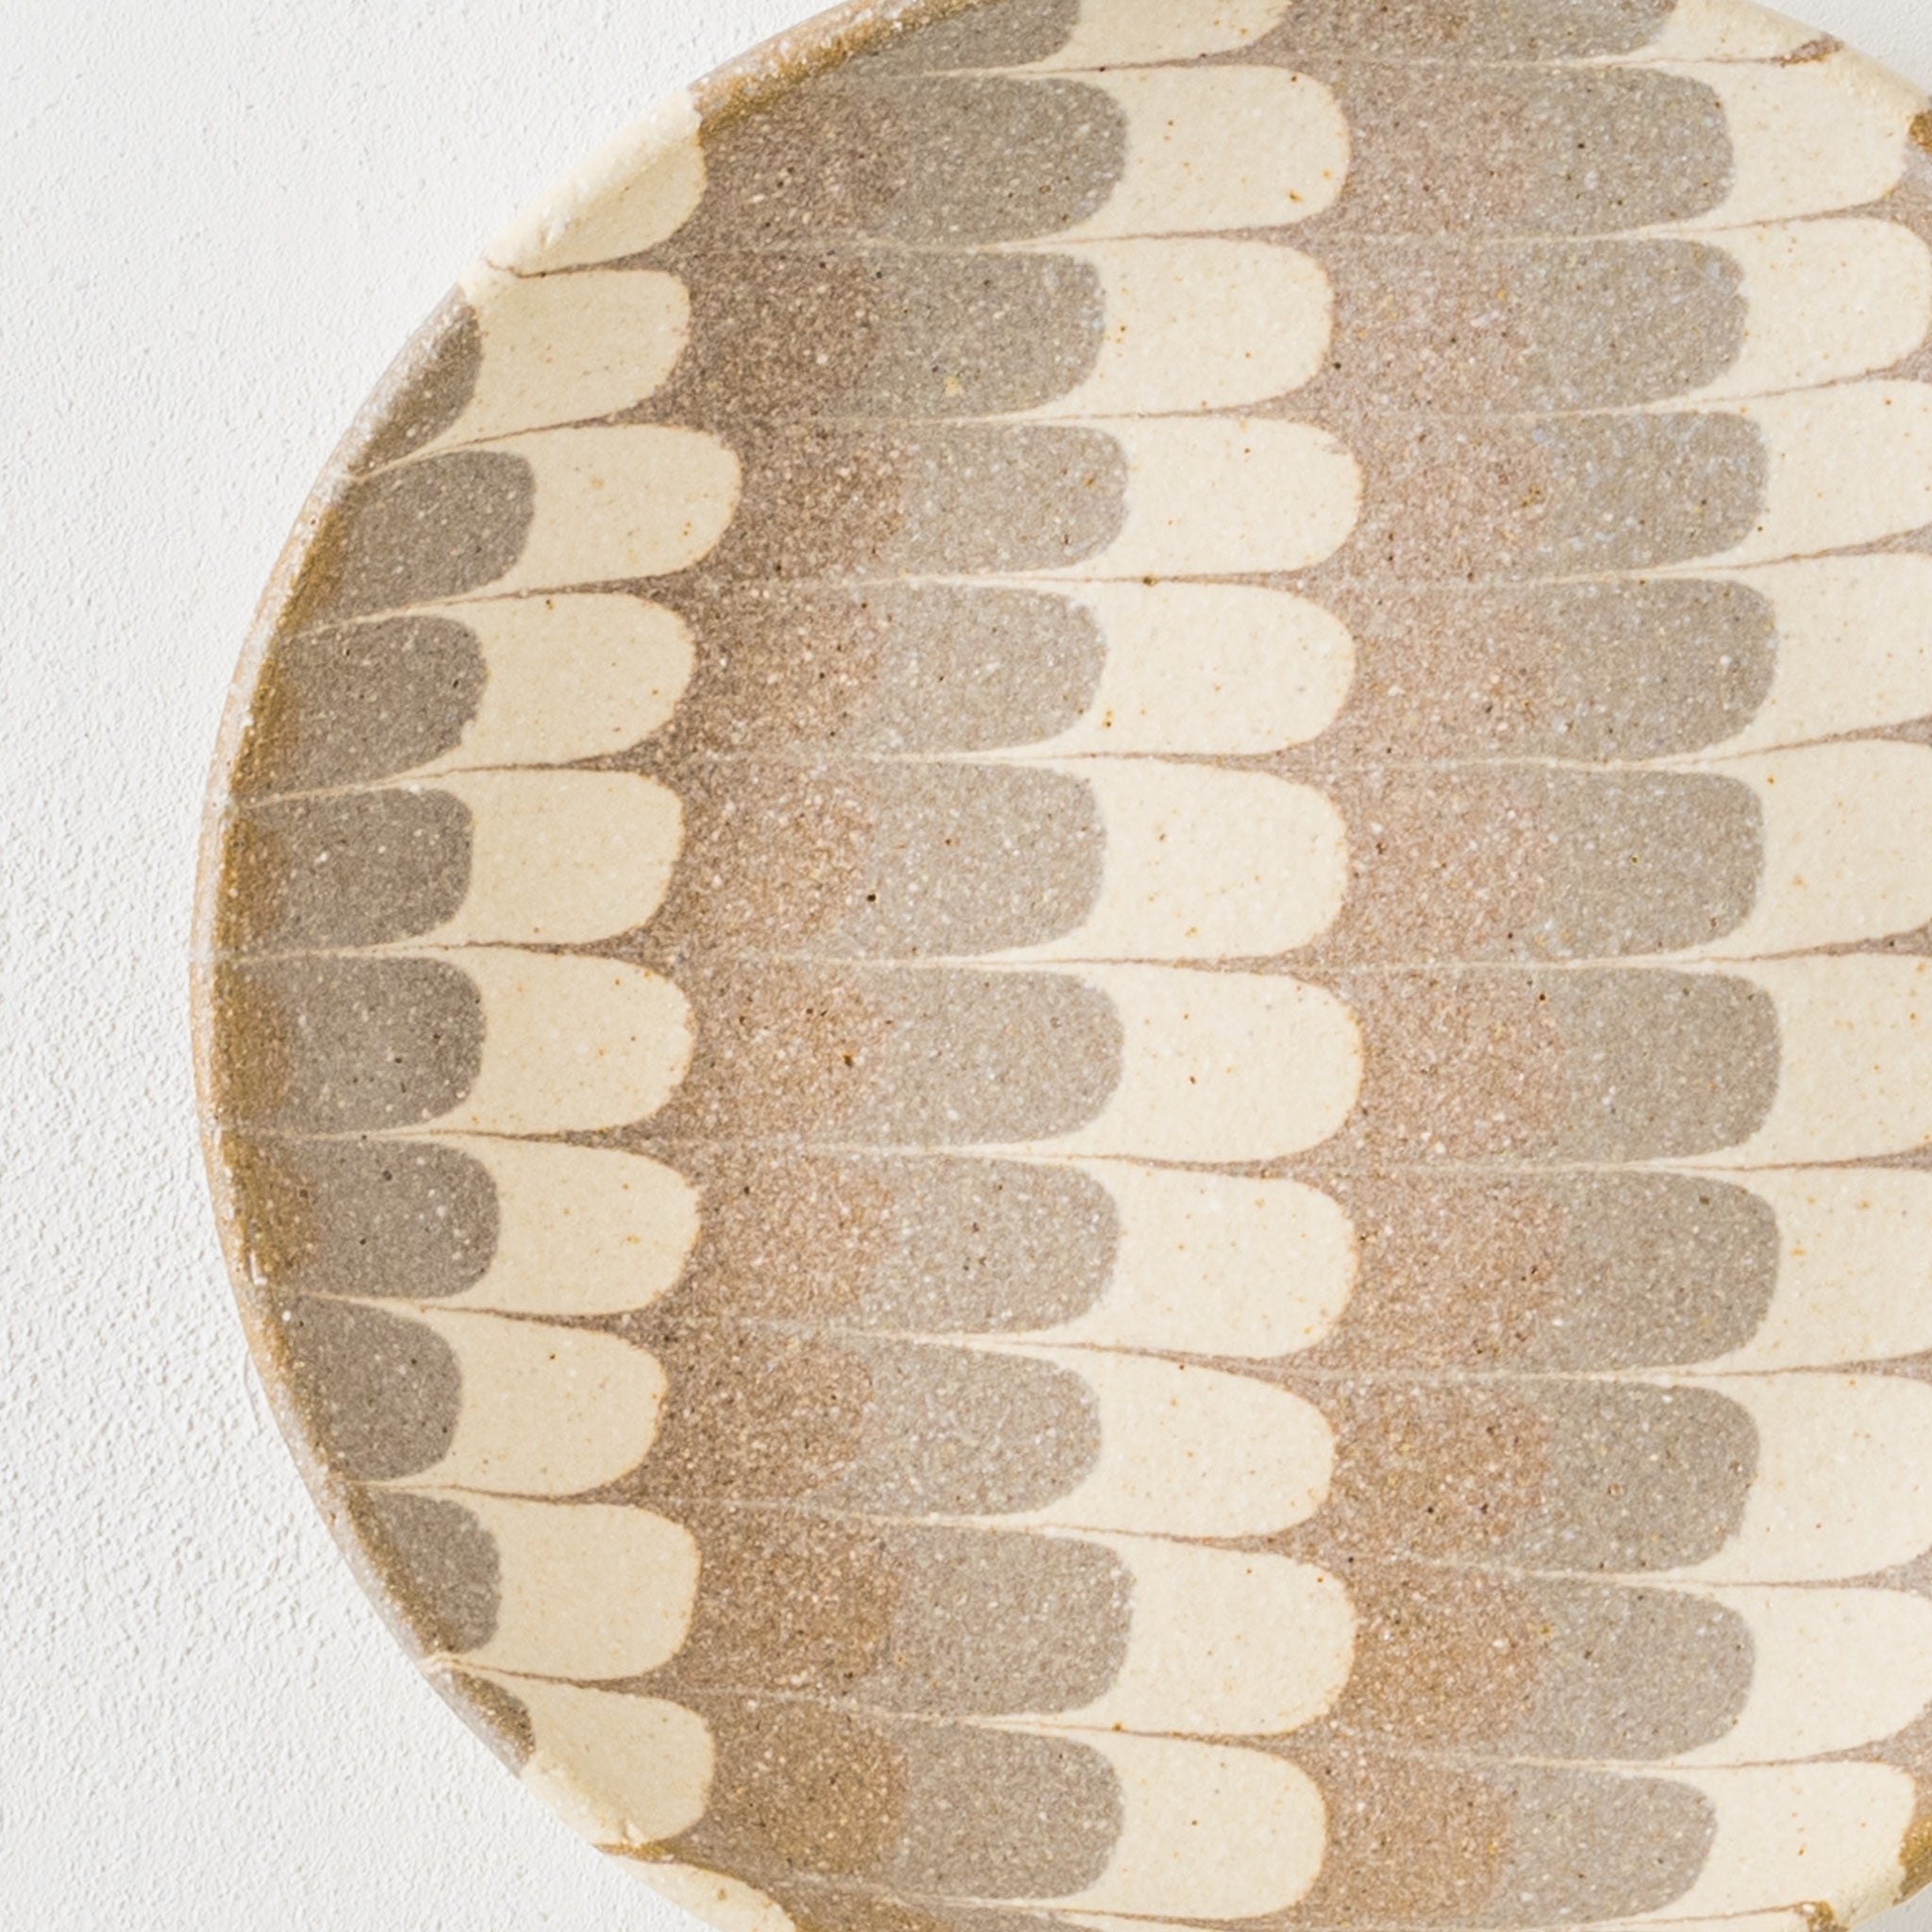 Hanako Sakashita's round plate with a warm quail pattern